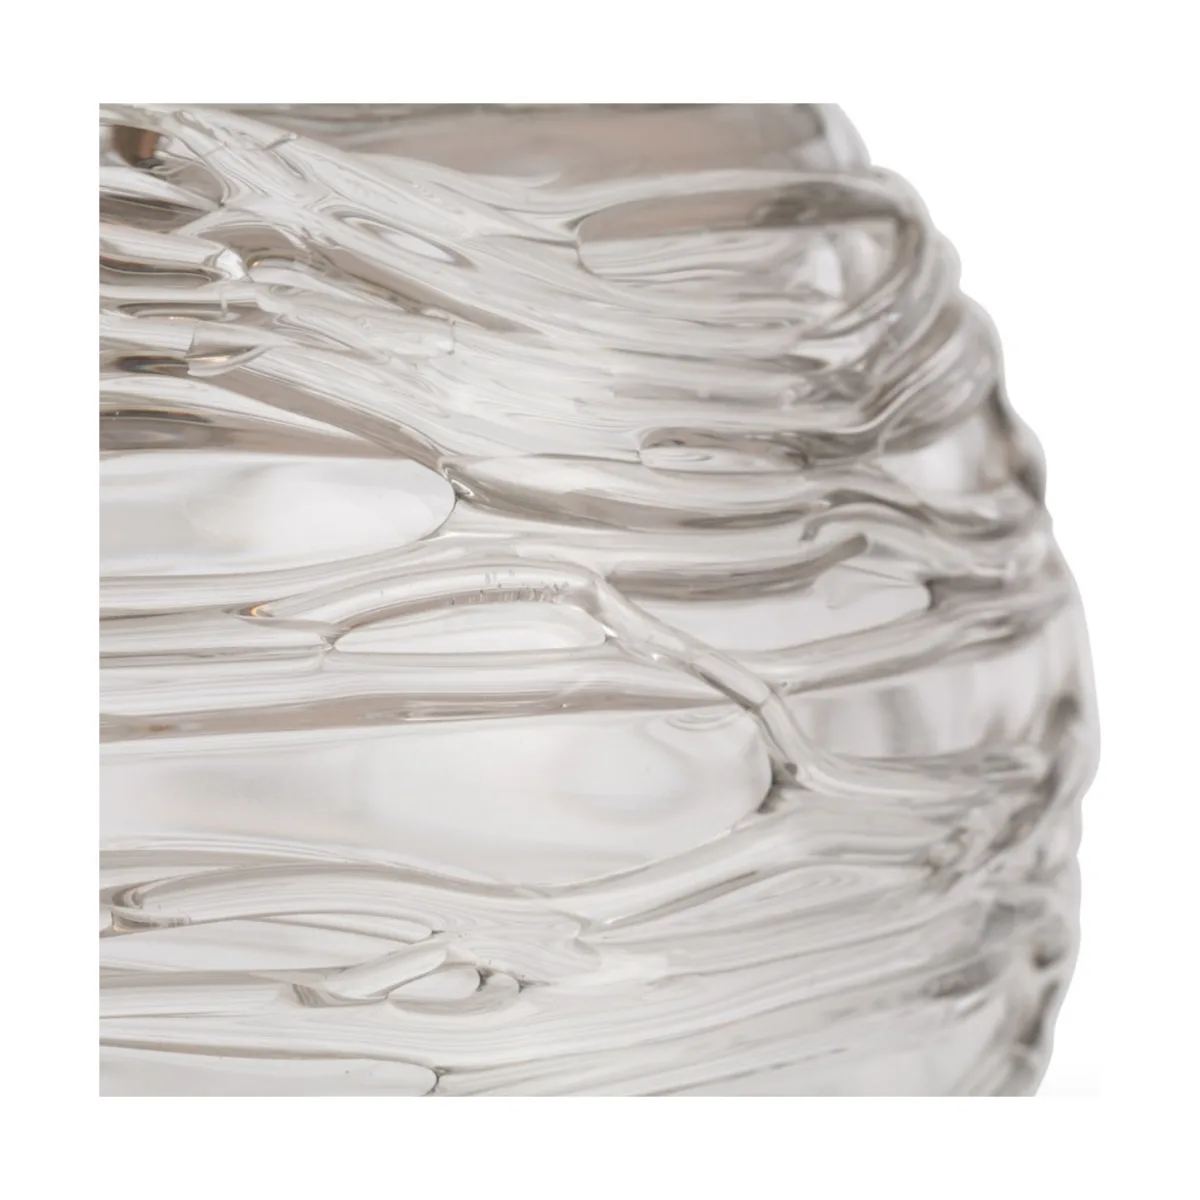 Luxury textured Glass vase lamp from Luxuria London